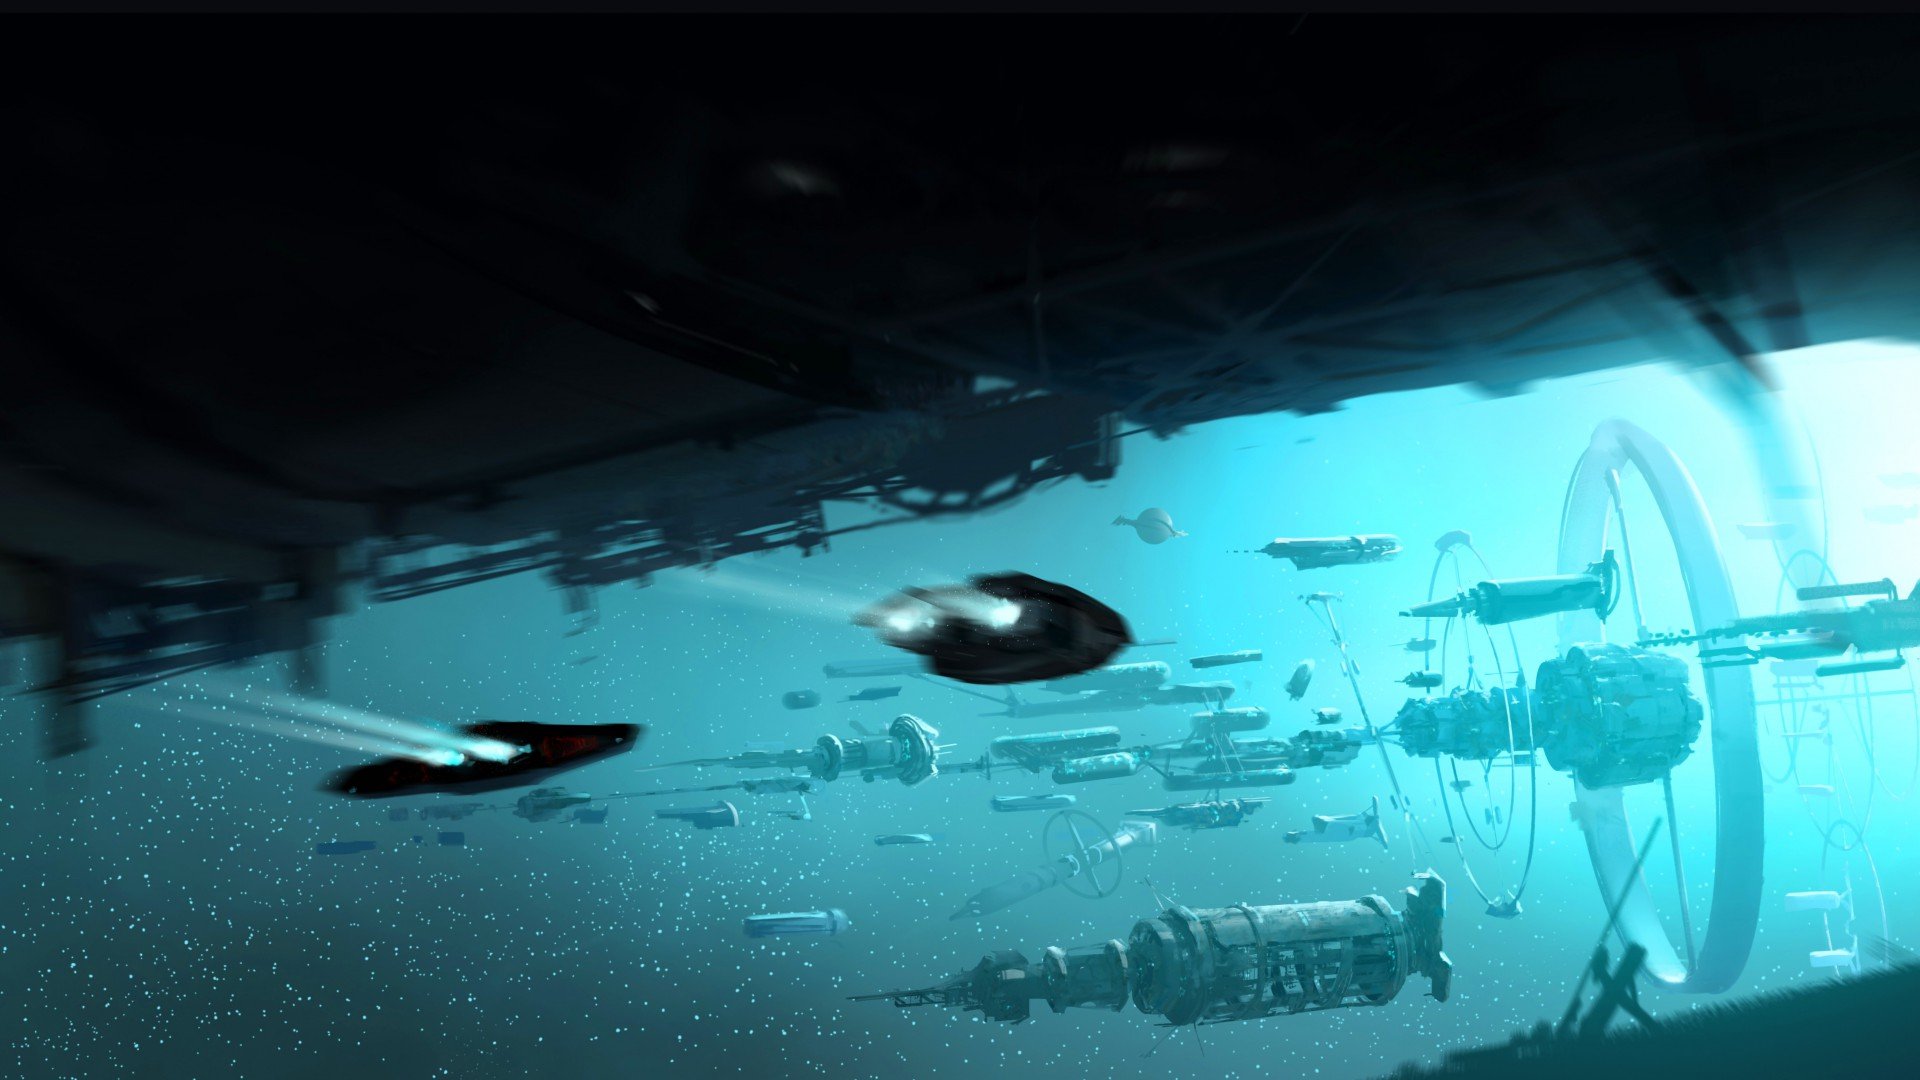  game space simulator sci fi black background control panel